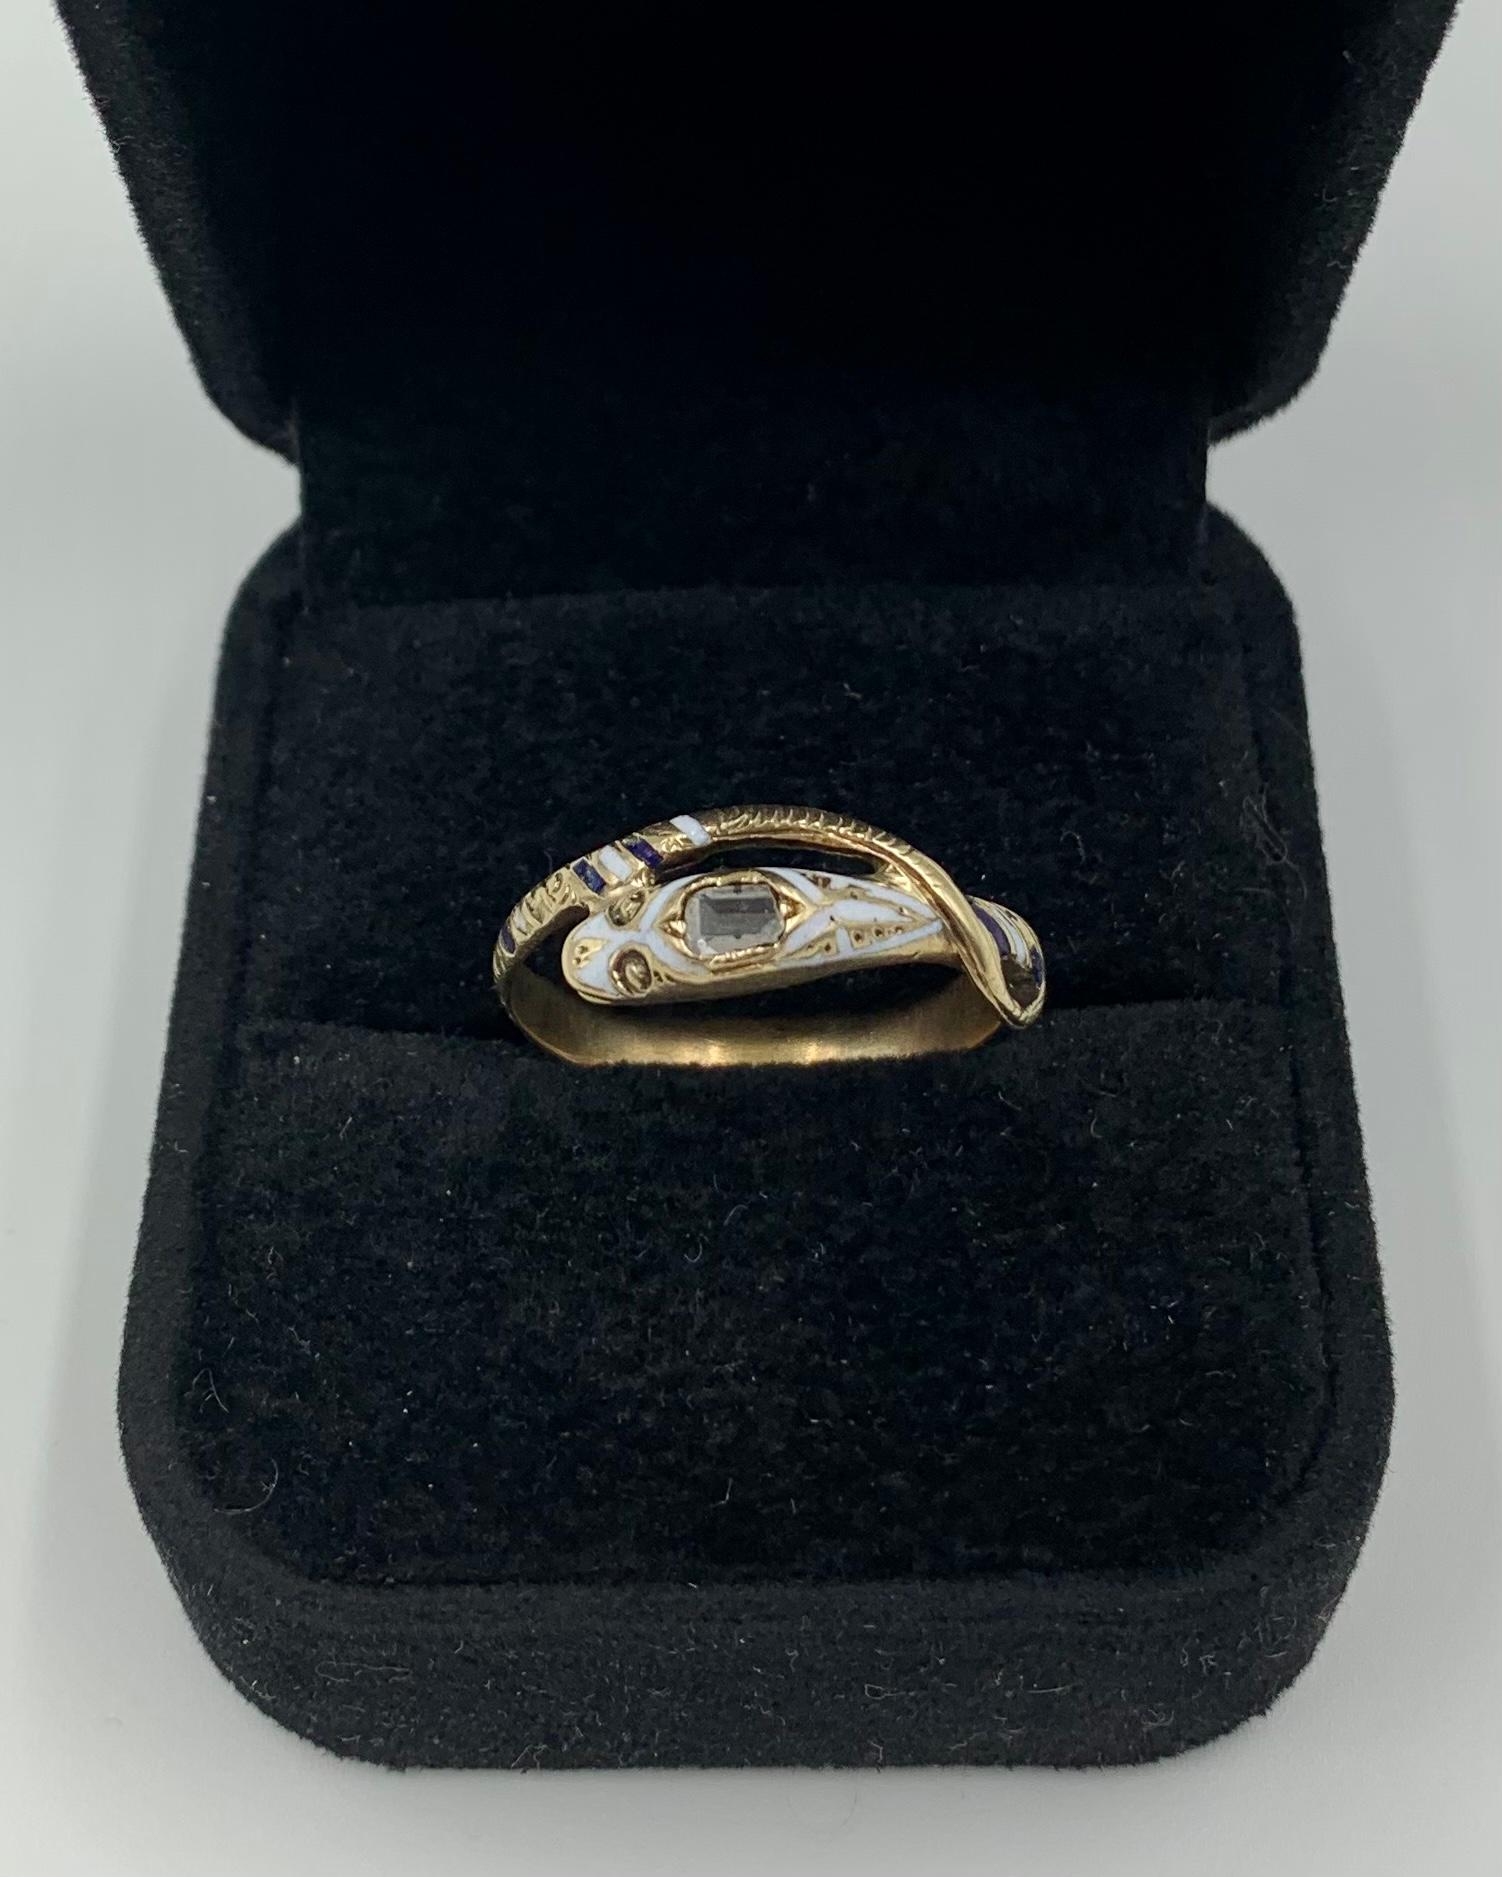 17th century ring